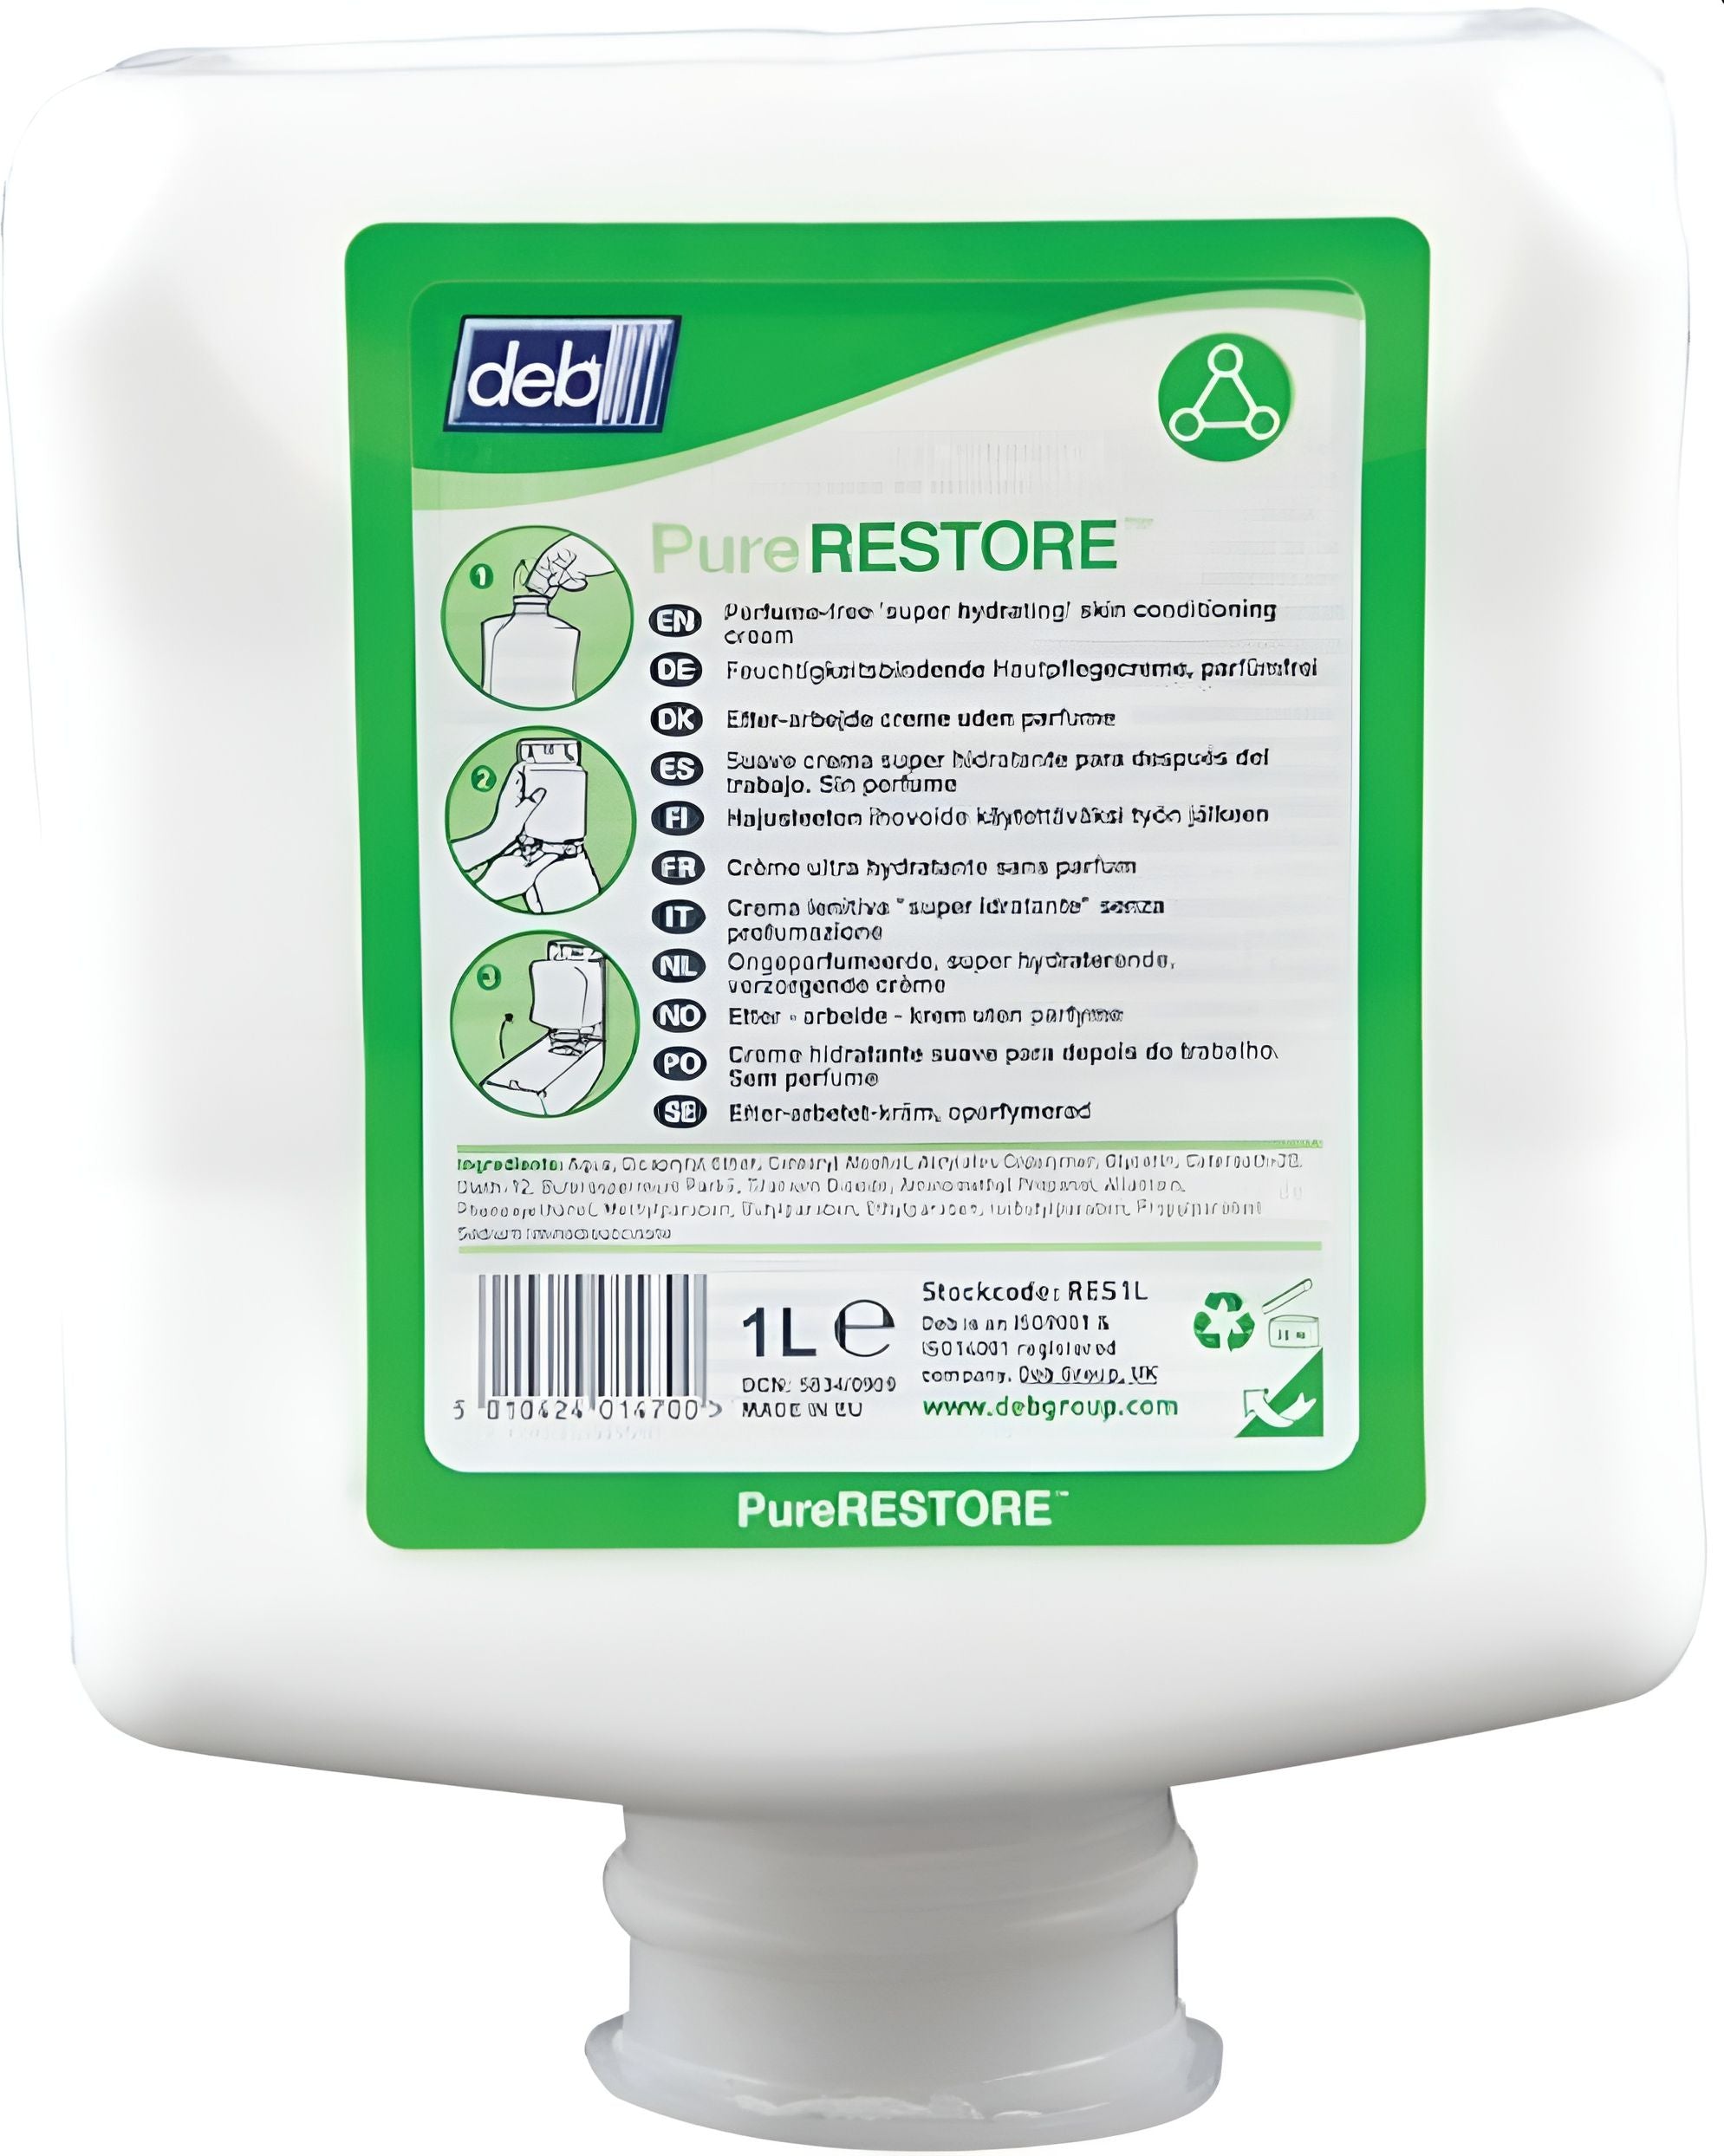 Deb Group - 1 L Pure Restore Hand Cream, 1 Liter/Bottle - RES1L